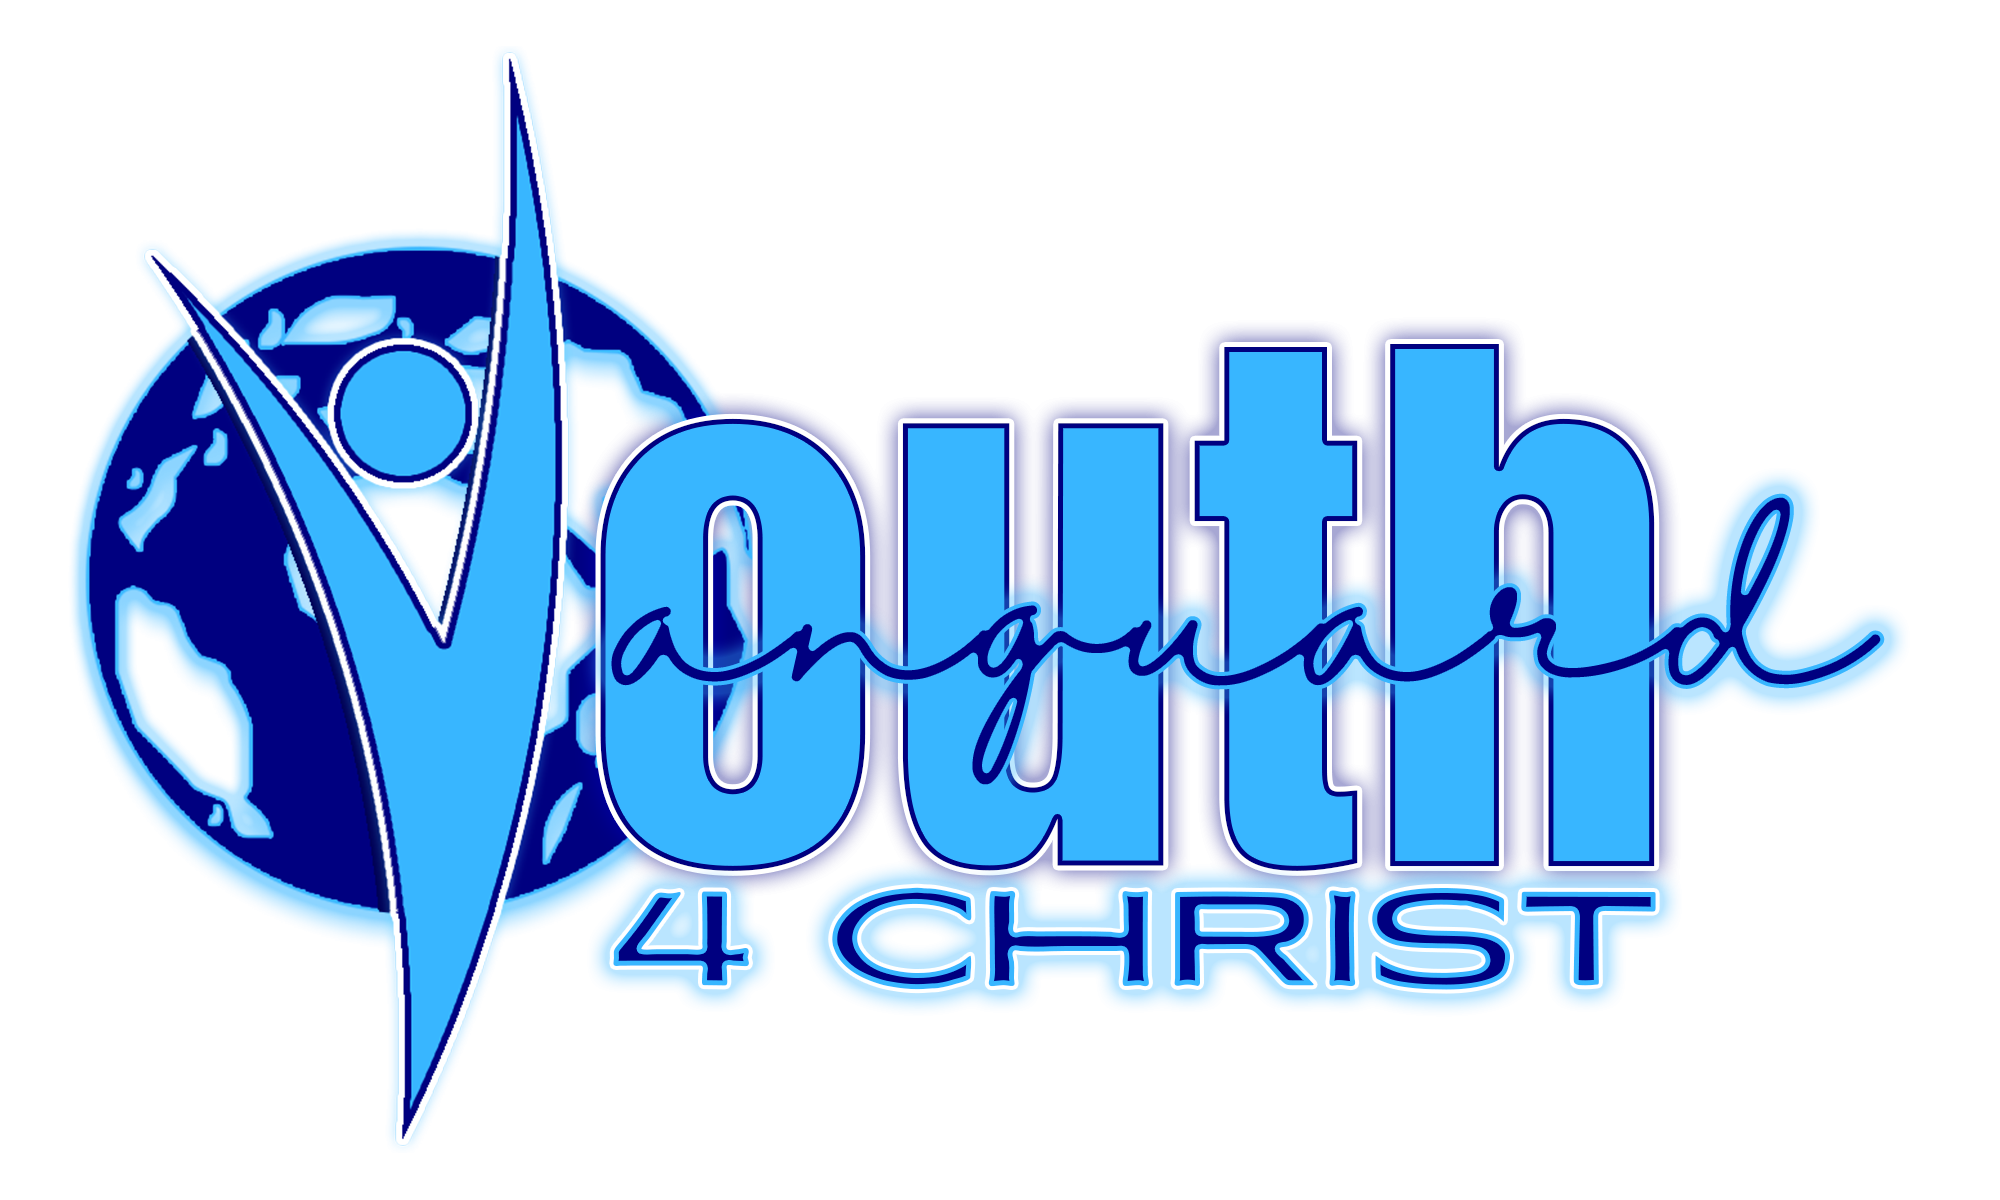 Vanguard Youth 4 Christ